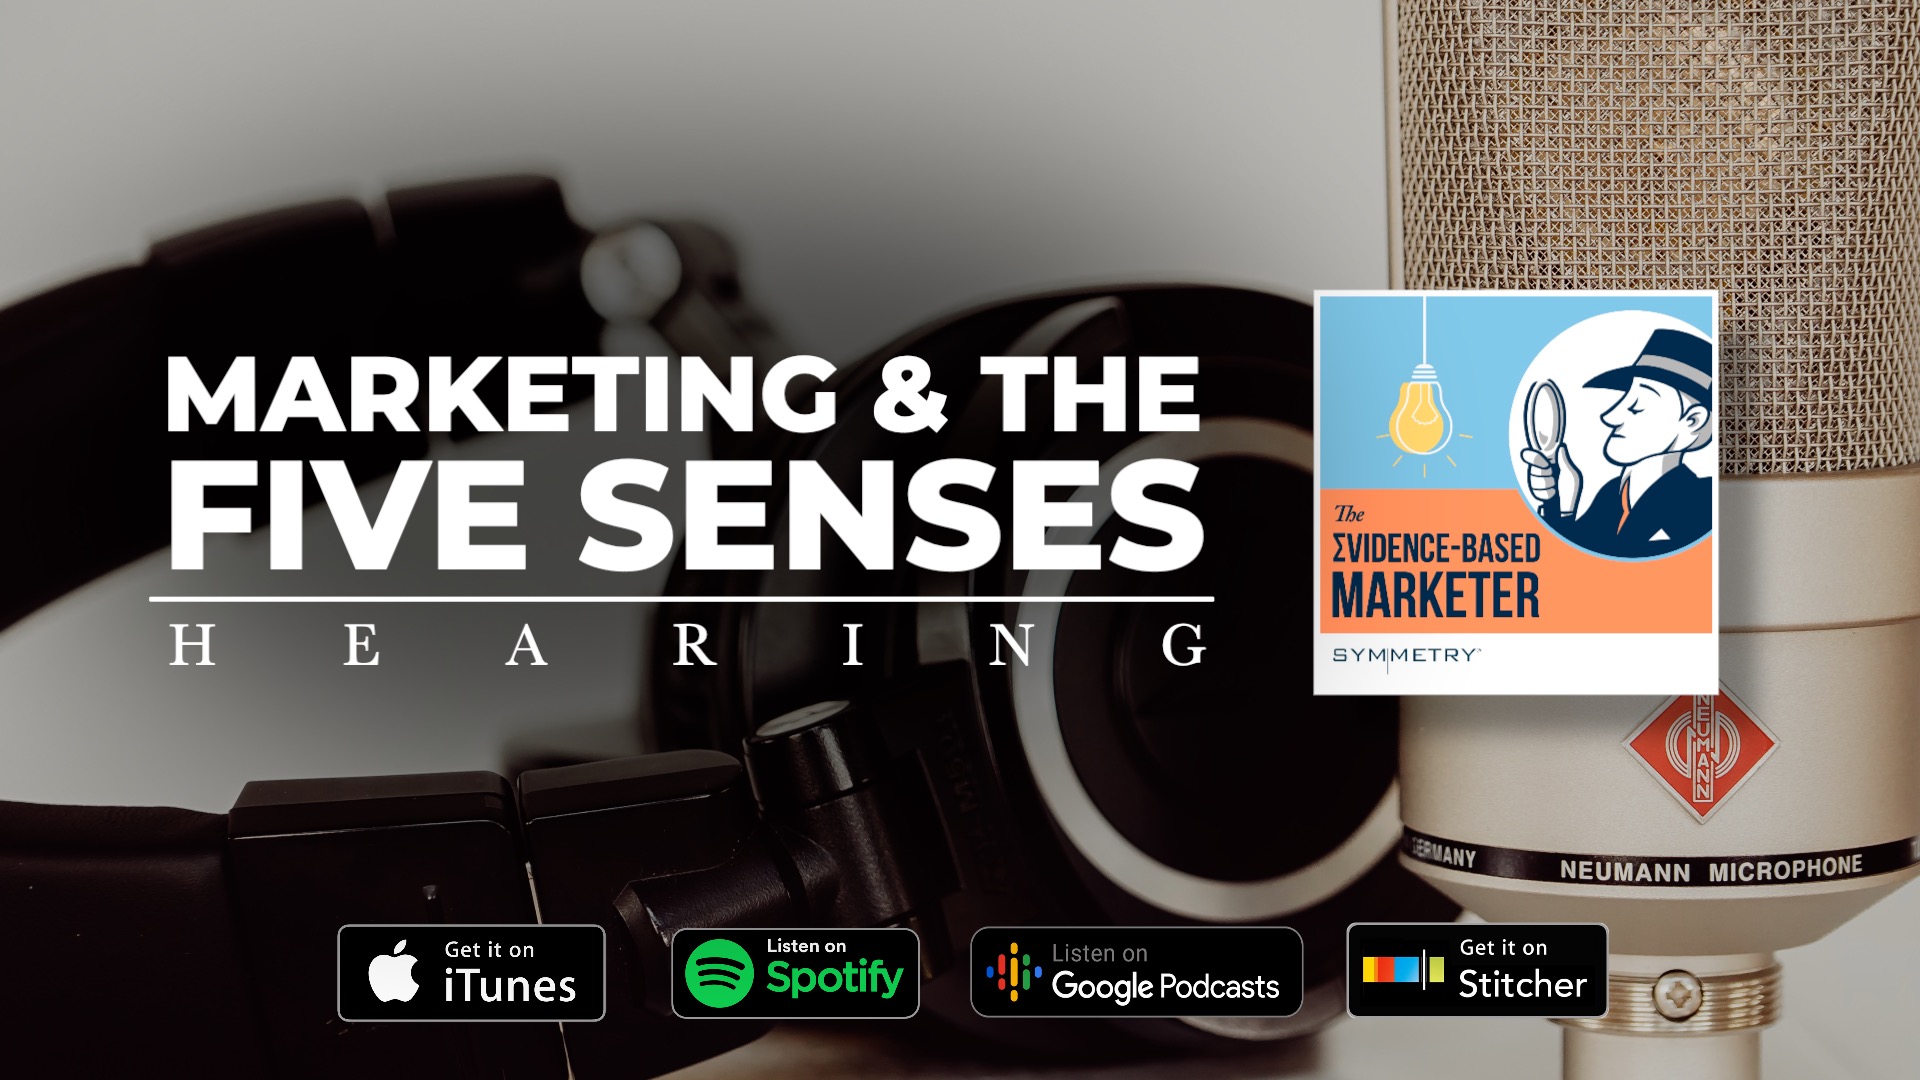 Marketing the Five Senses - Hearing